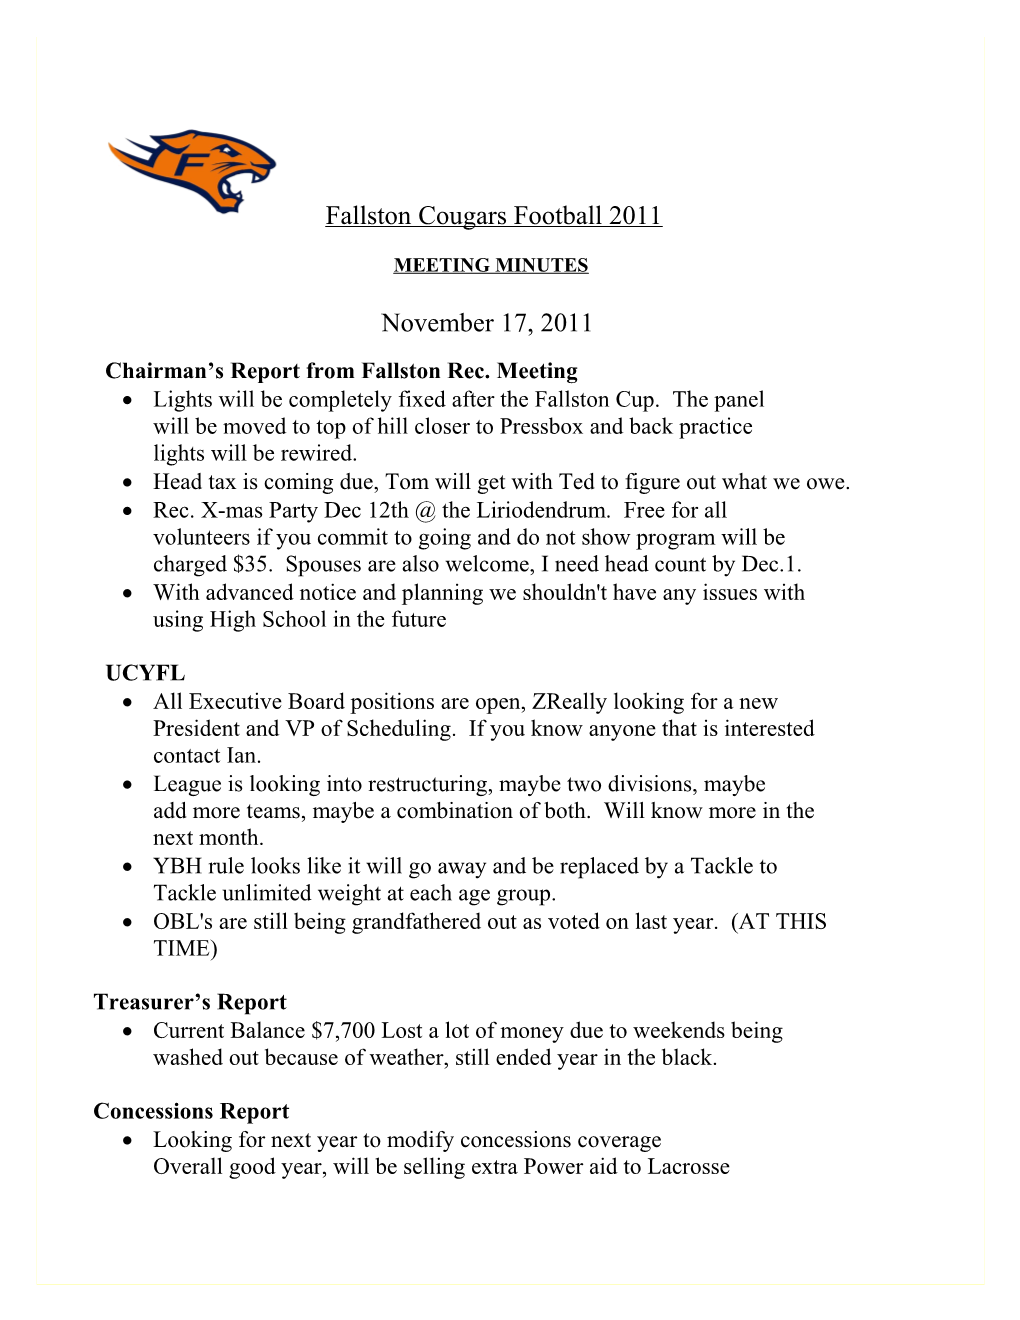 Fallston Cougars Football 2000